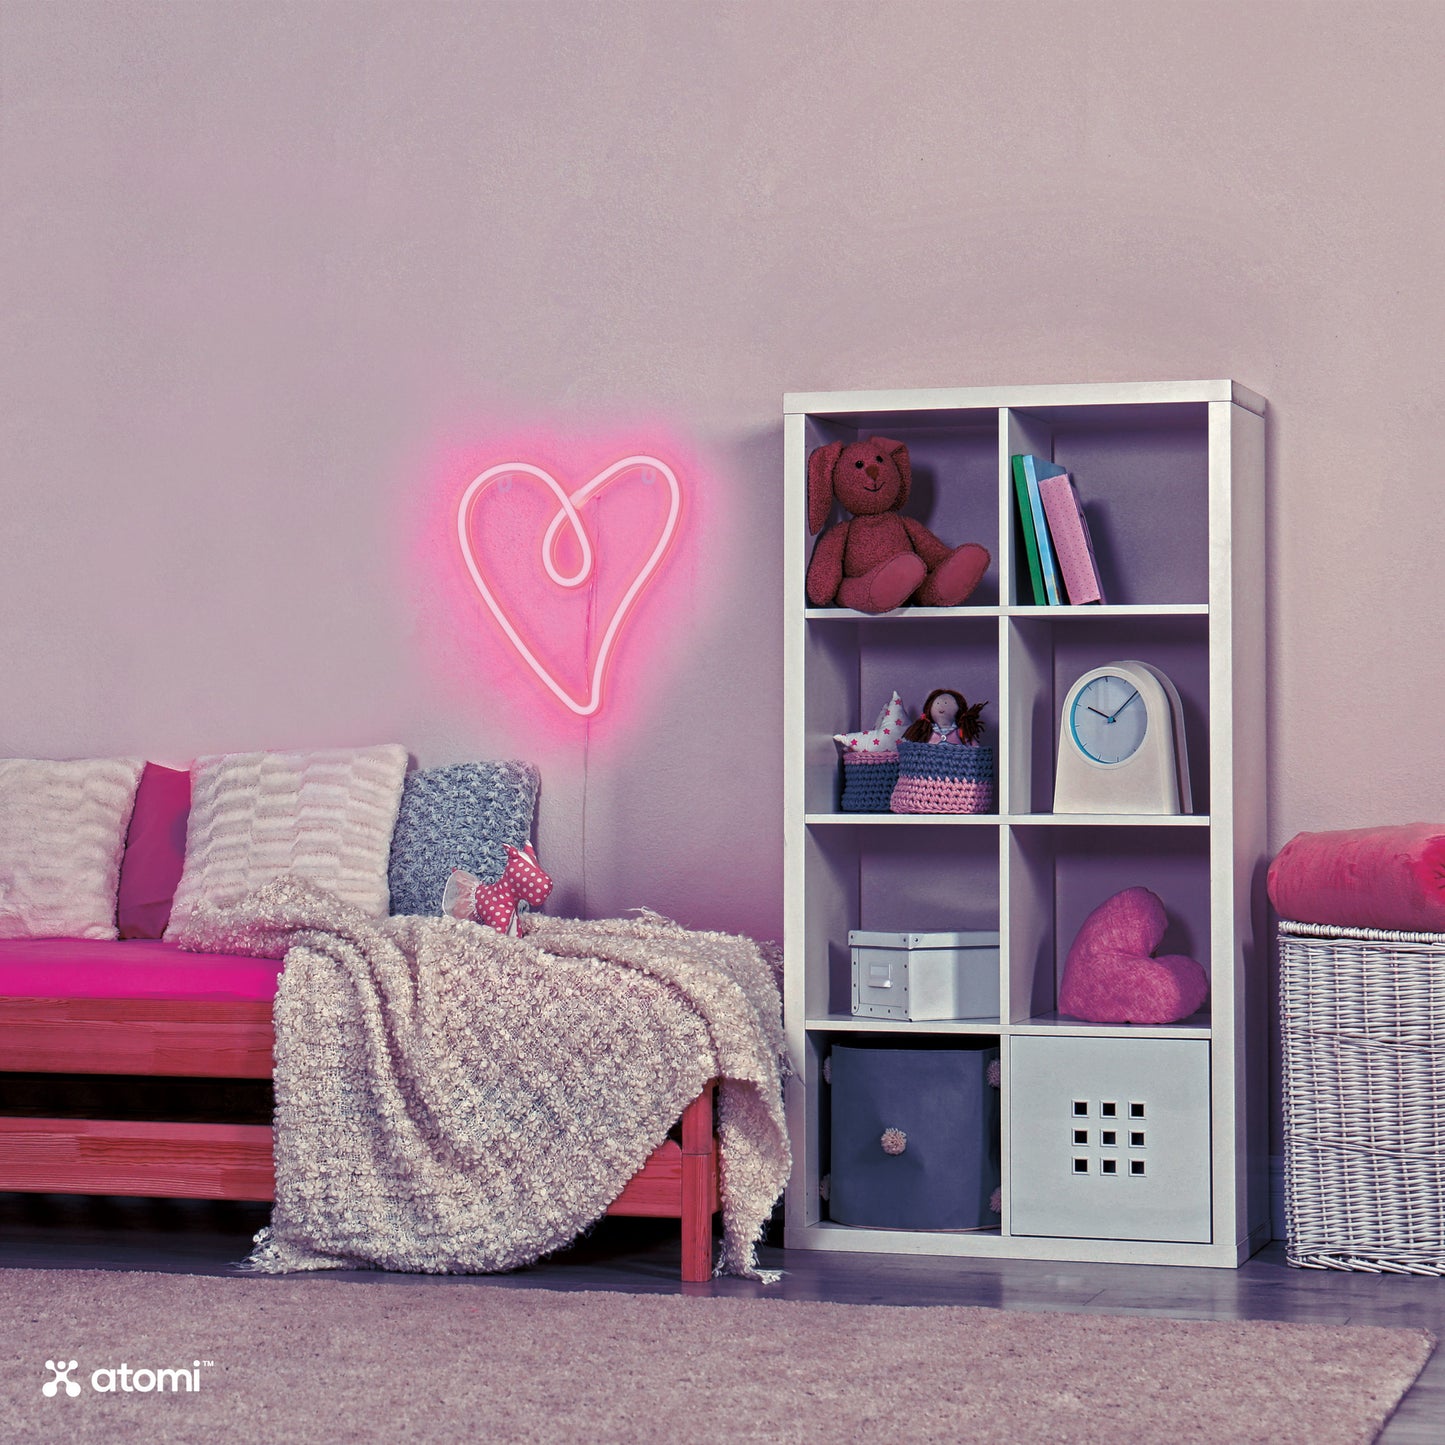 Pink Retro Heart Neon Light